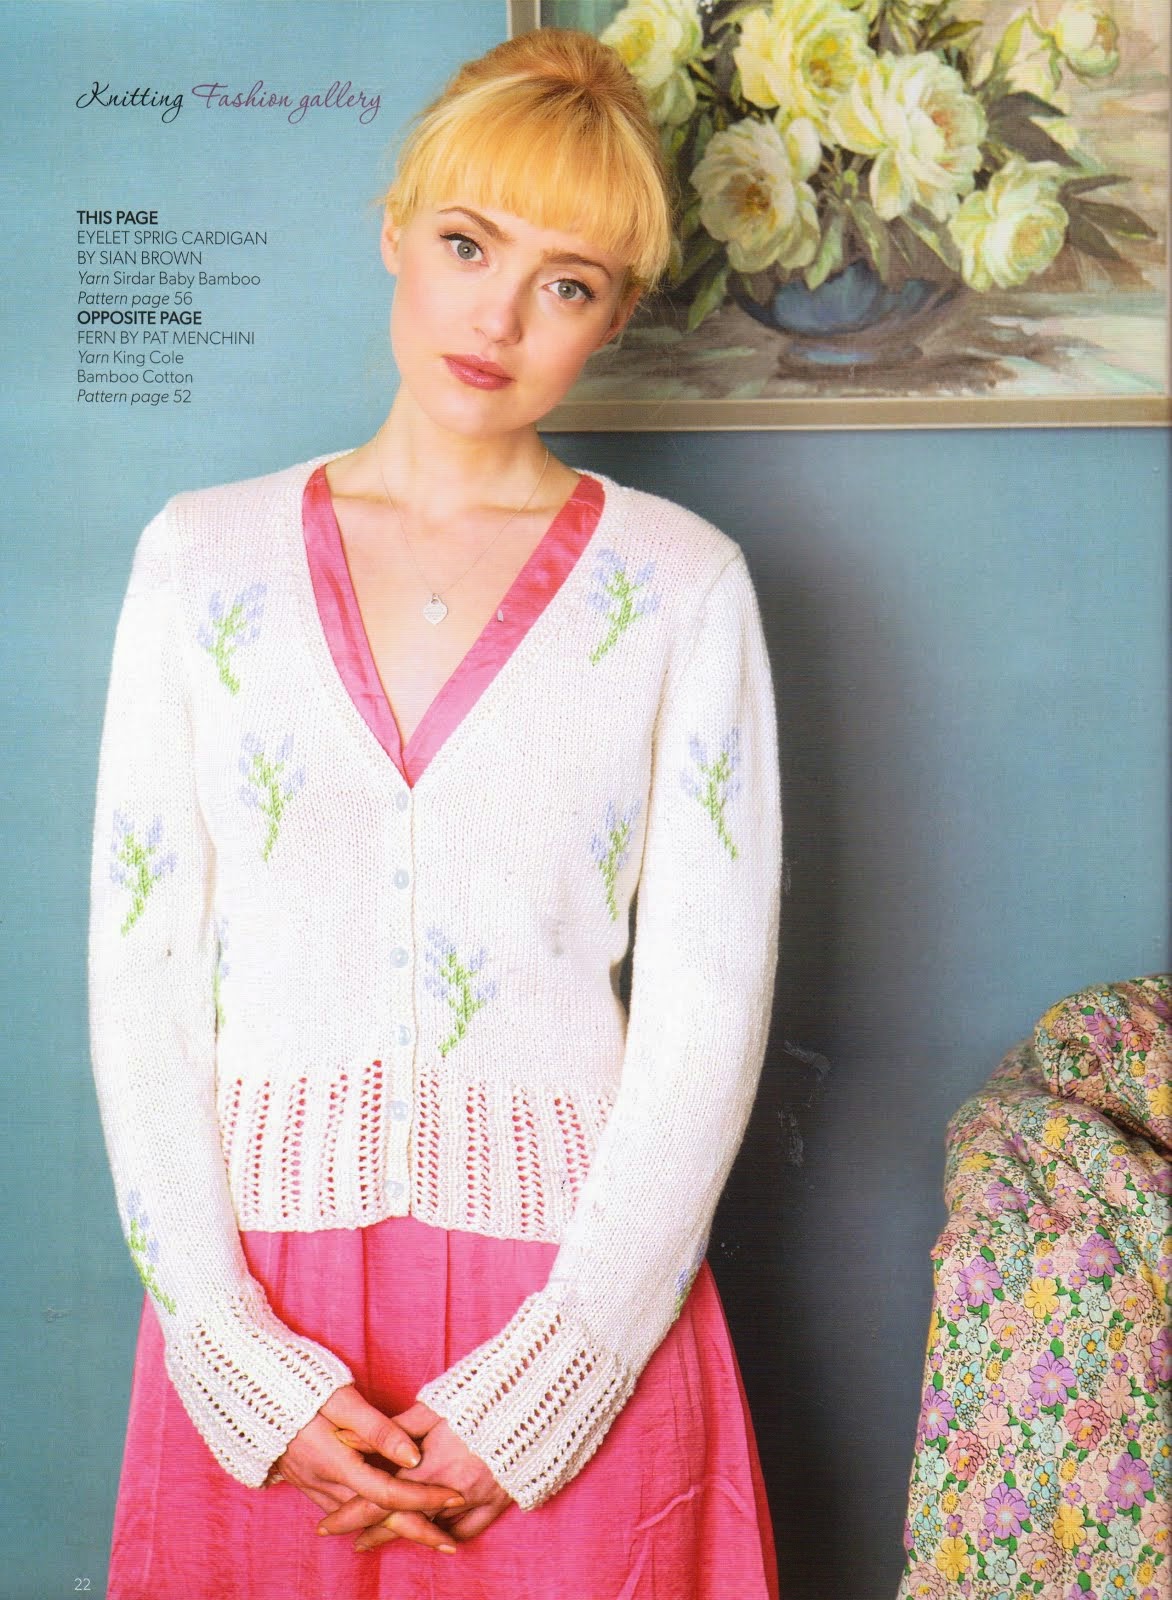 Knitting Magazine